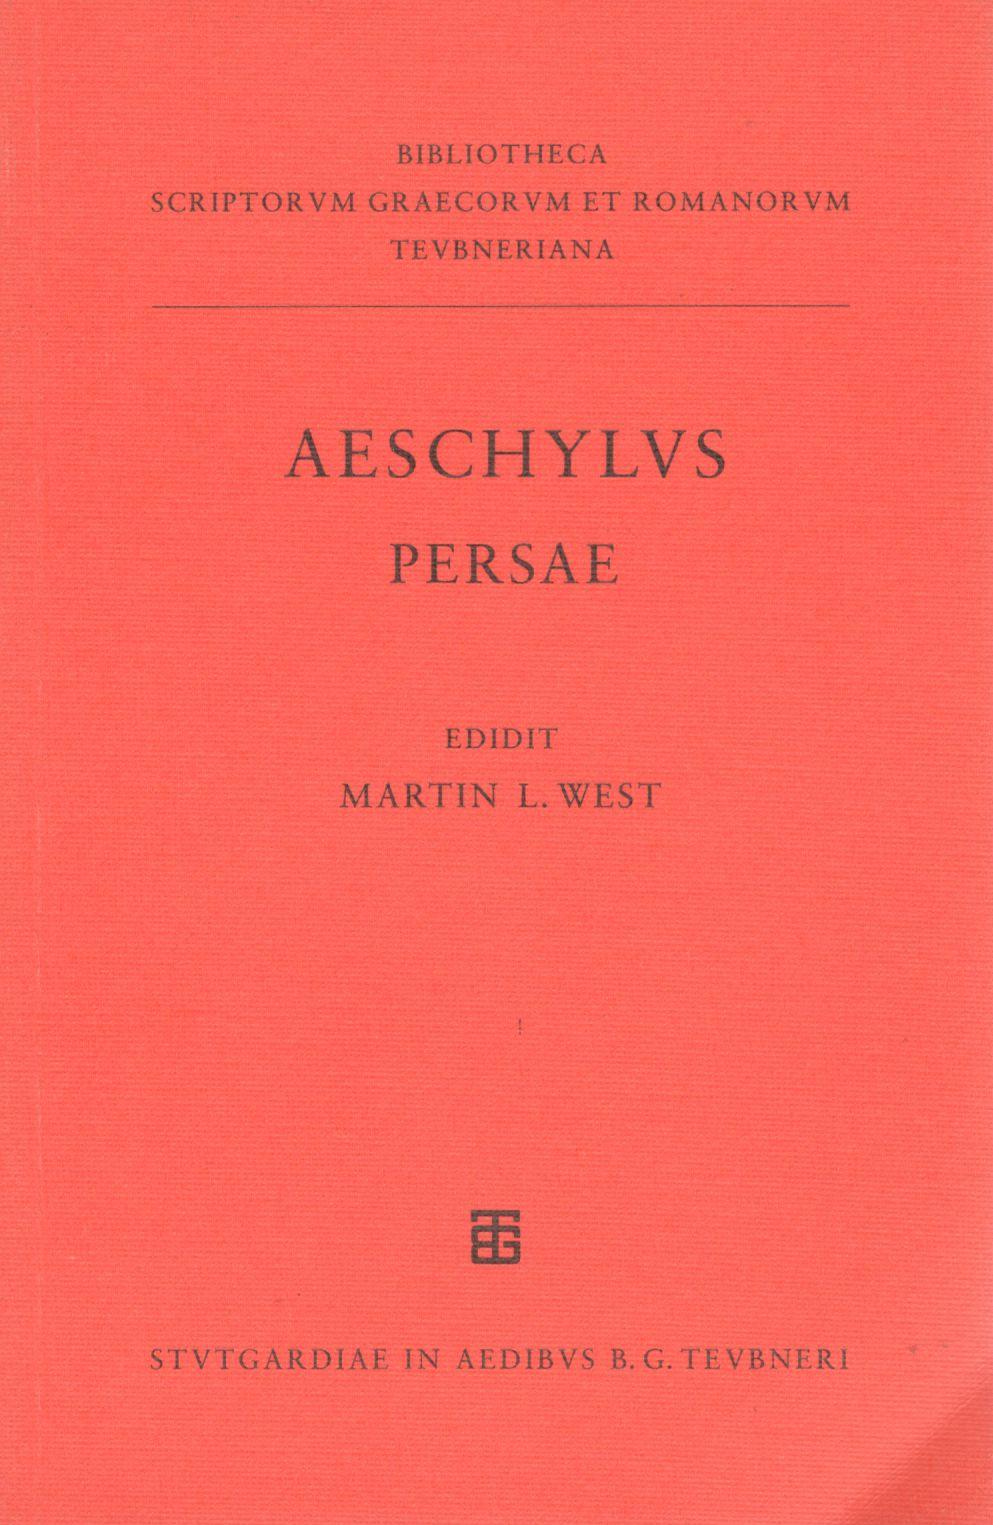 AESCHYLI PERSAE